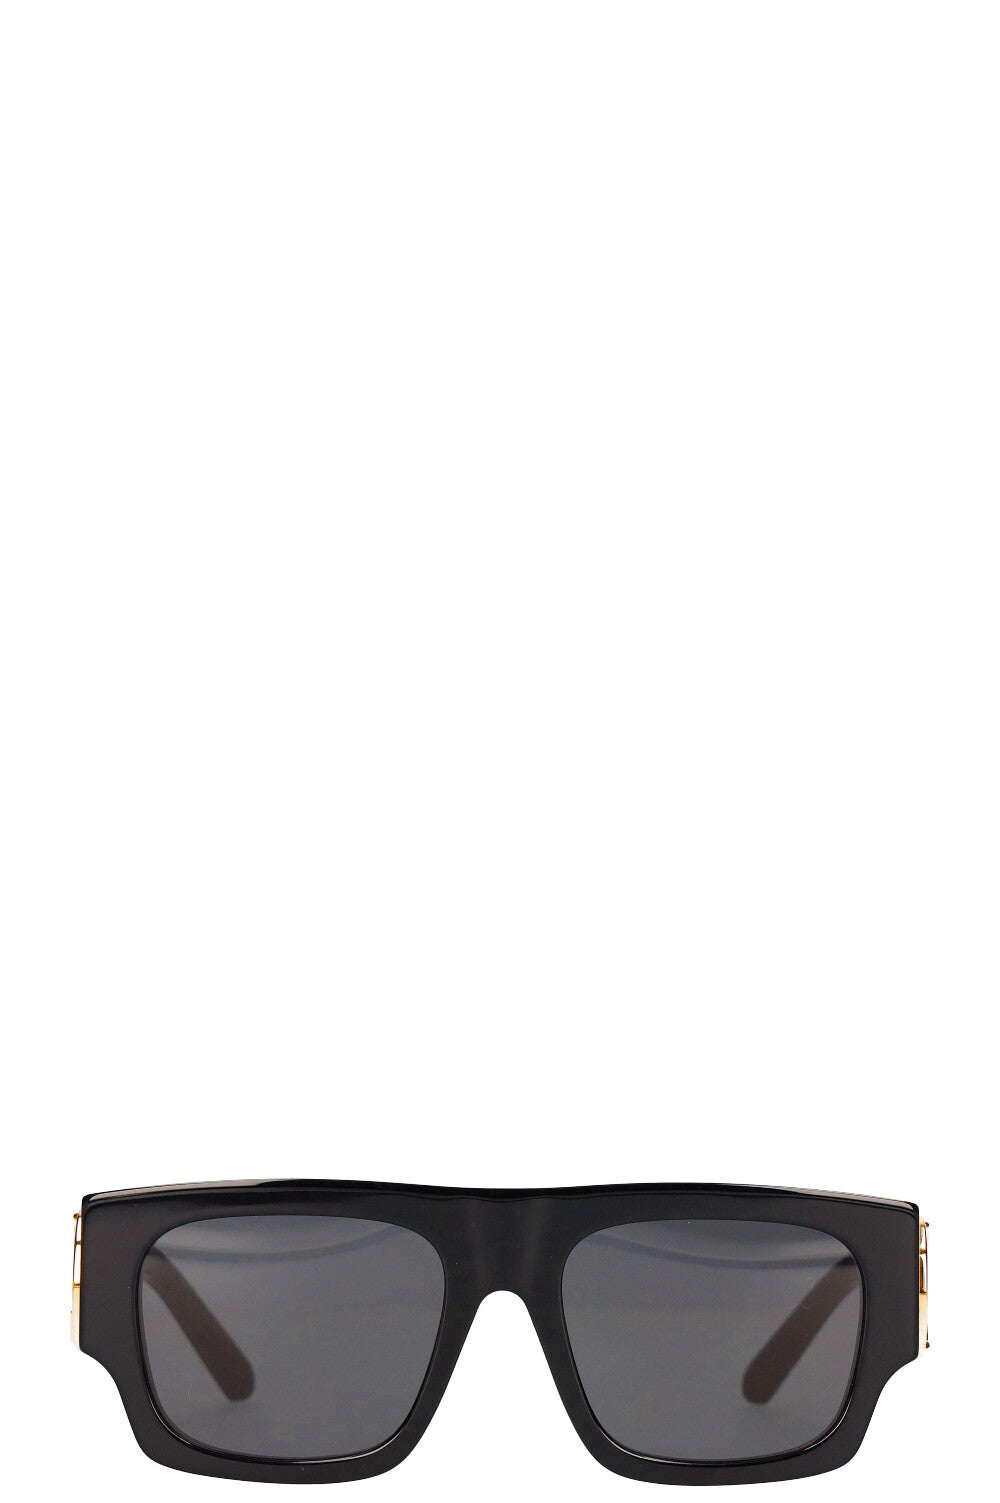 Louis Vuitton Link Cat Eye Sunglasses Black – DAC